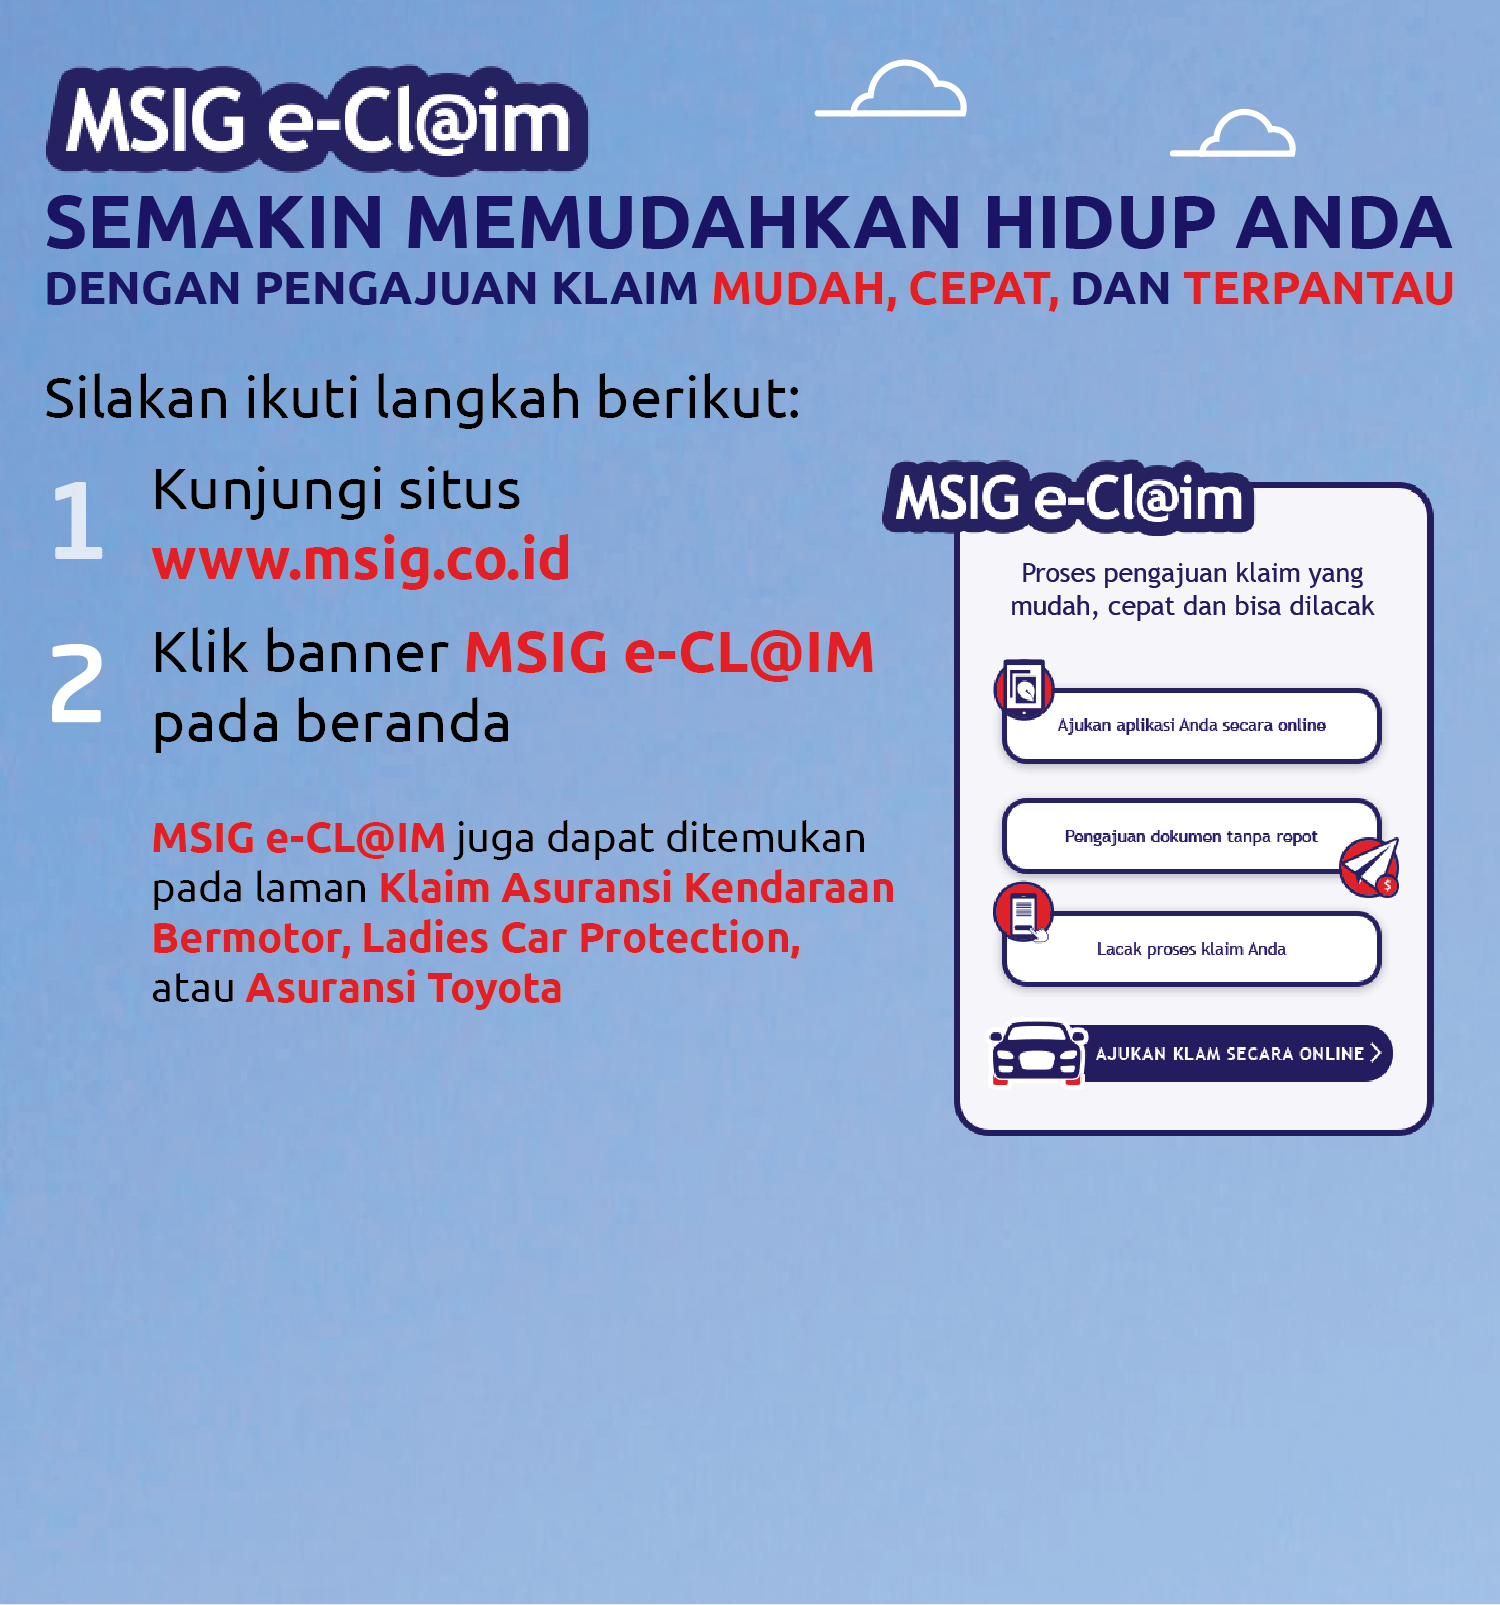 MSIG eclaim mobile banner image